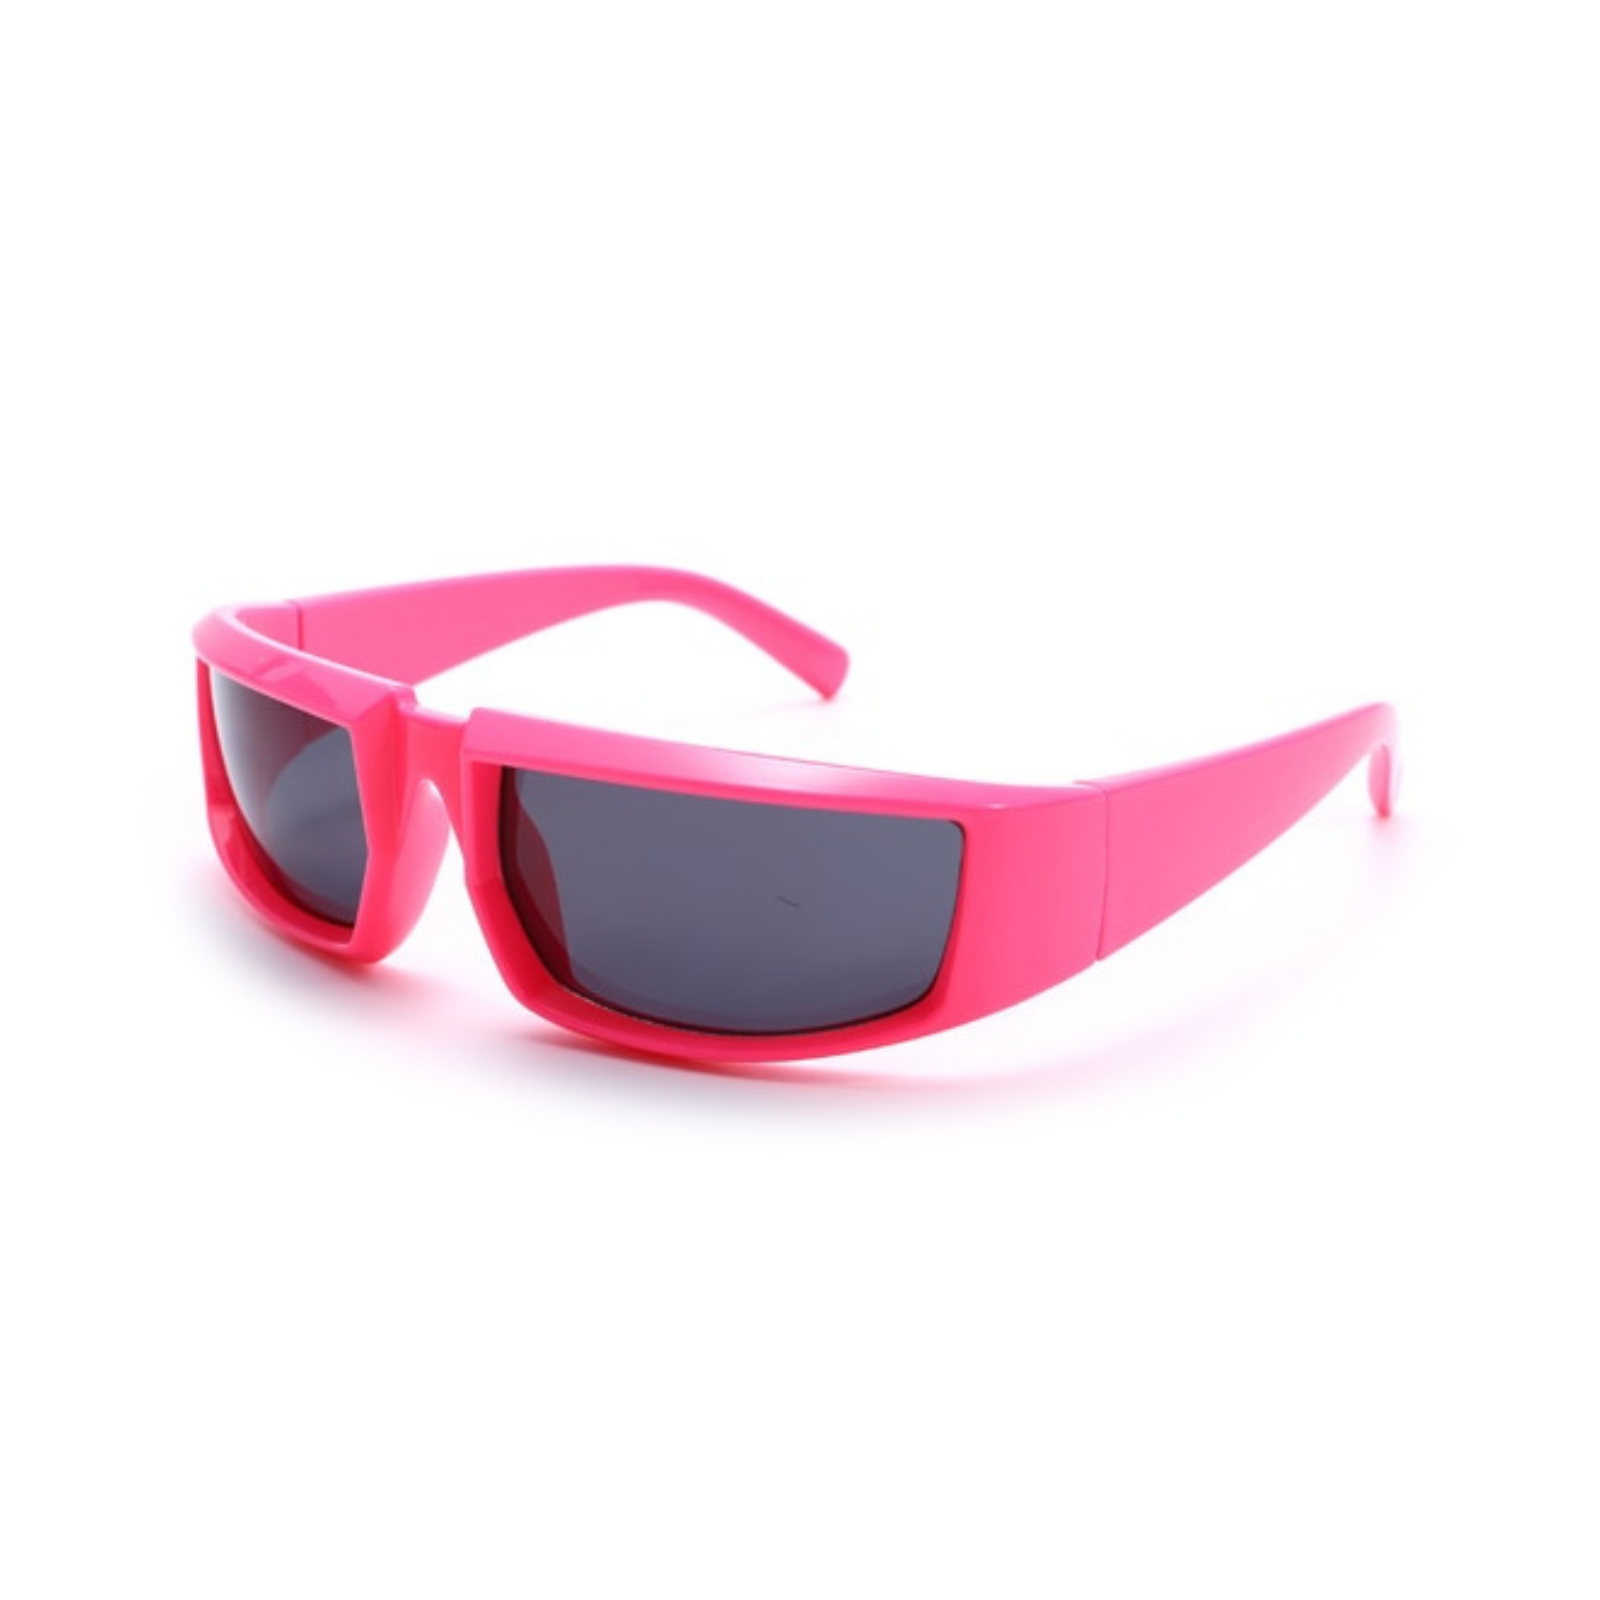 Lexus Sunglasses + Pink